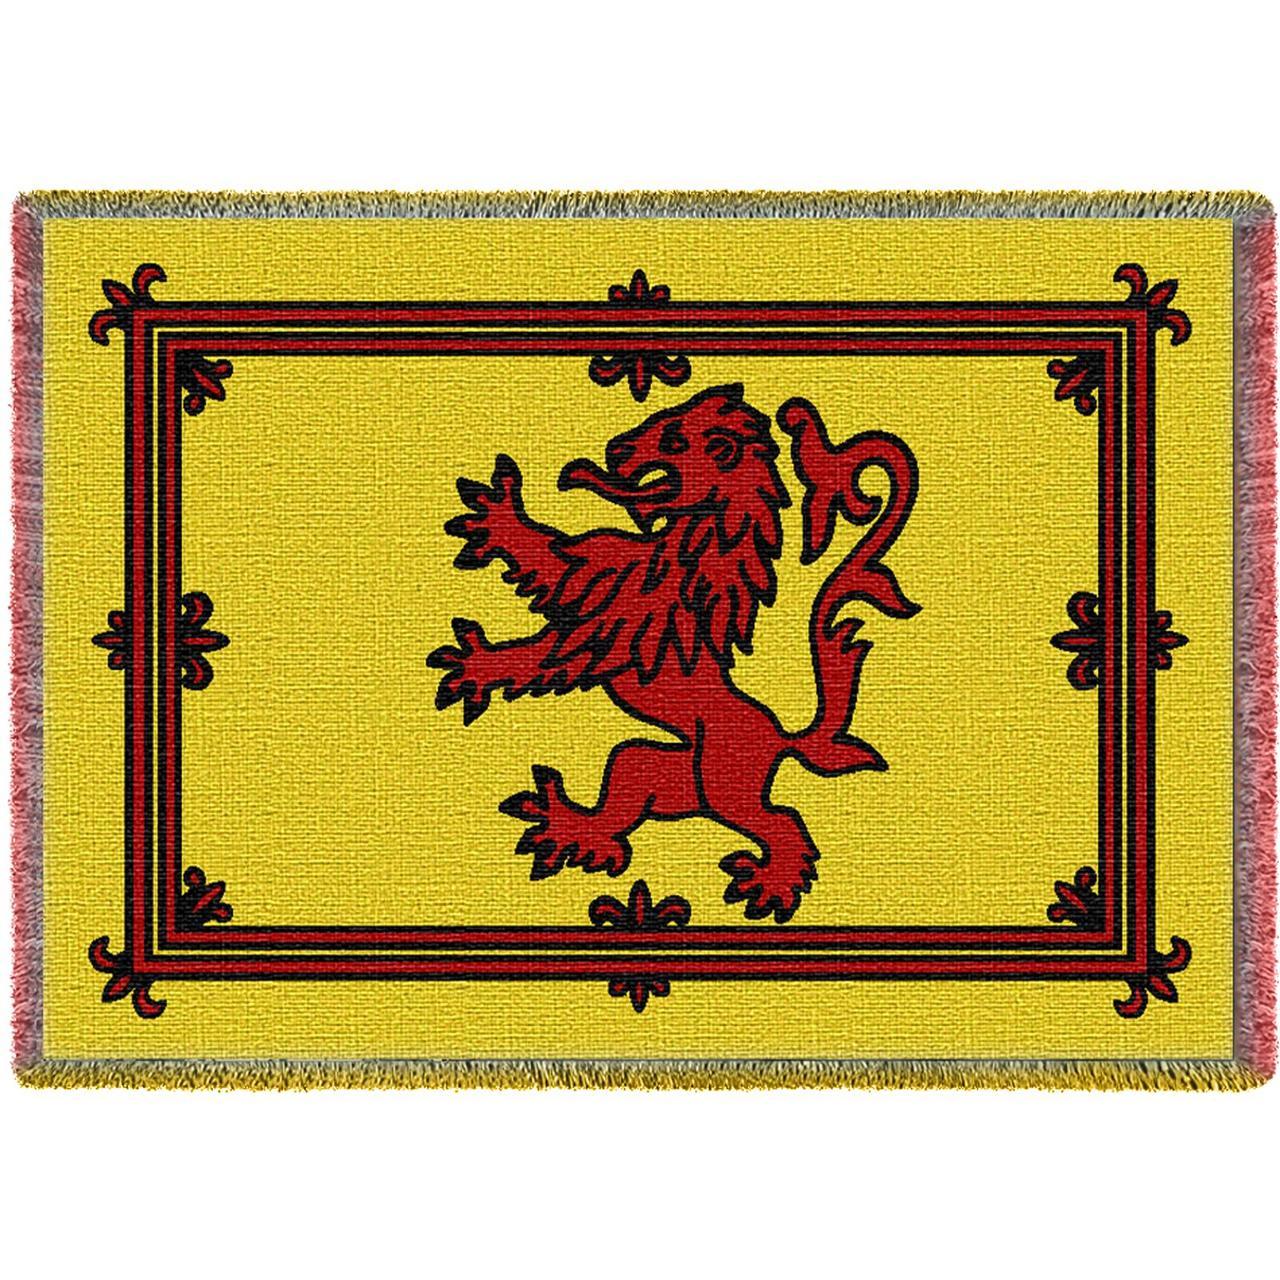 Scottish Rampant Lion Woven Throw Blanket with Fringe